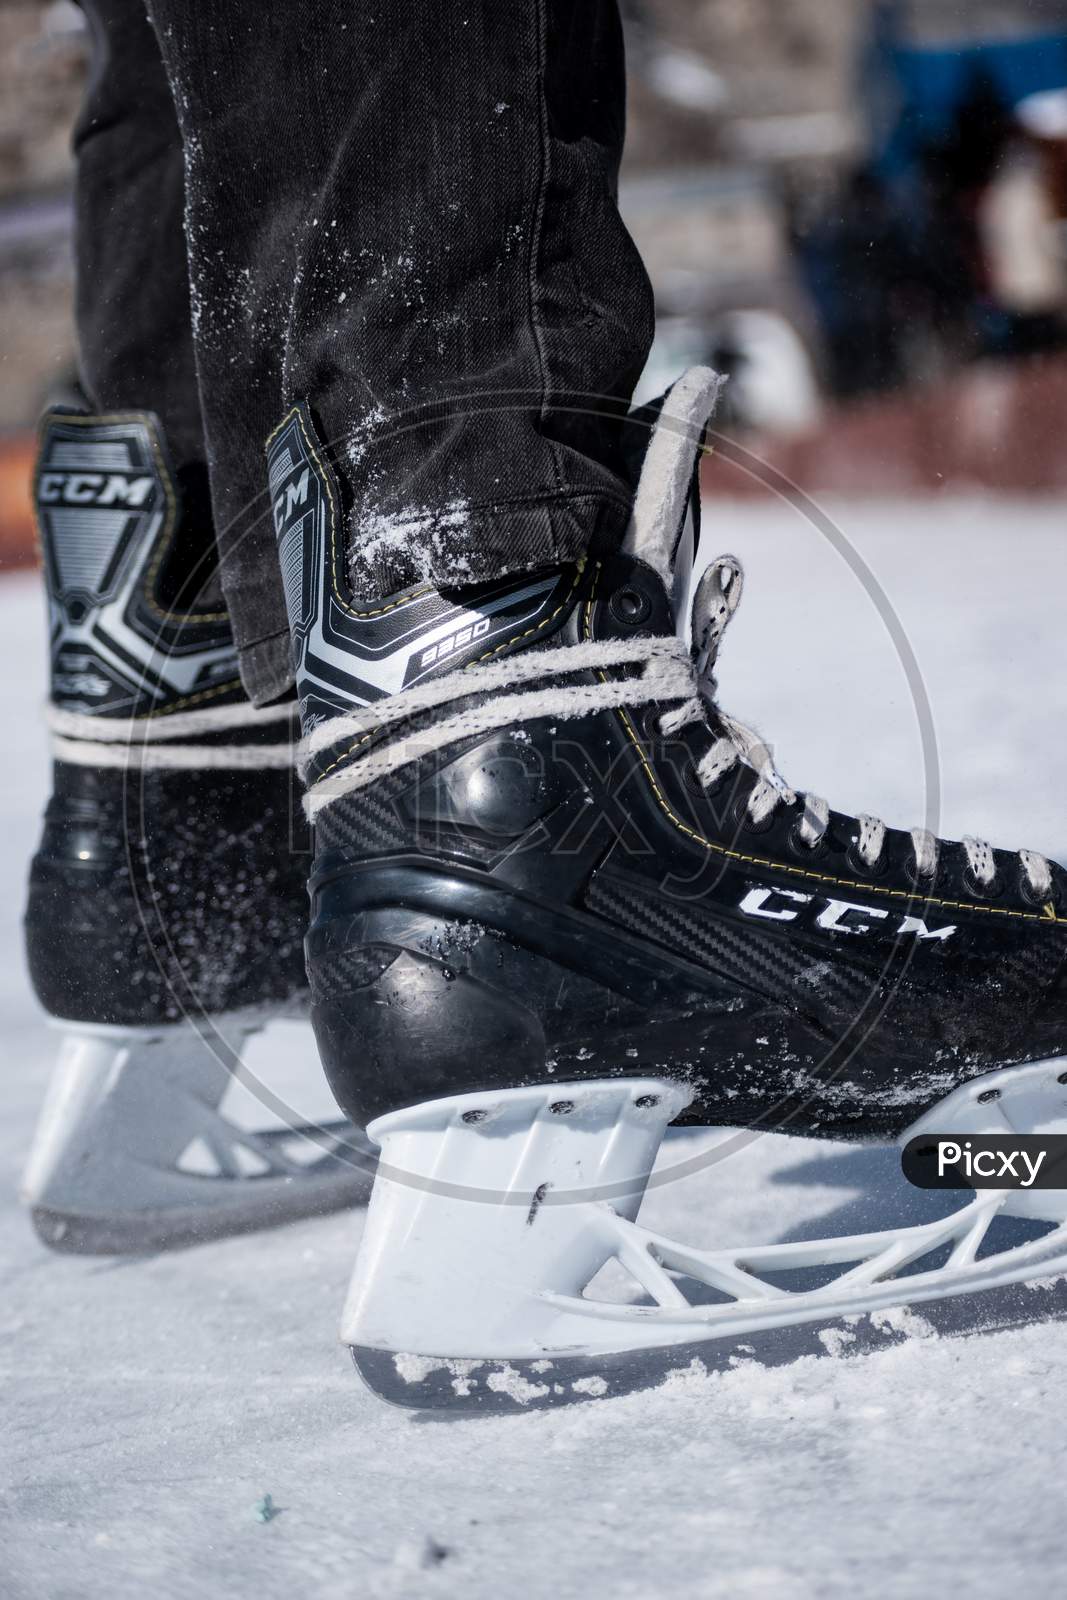 Ice Skating Shoes